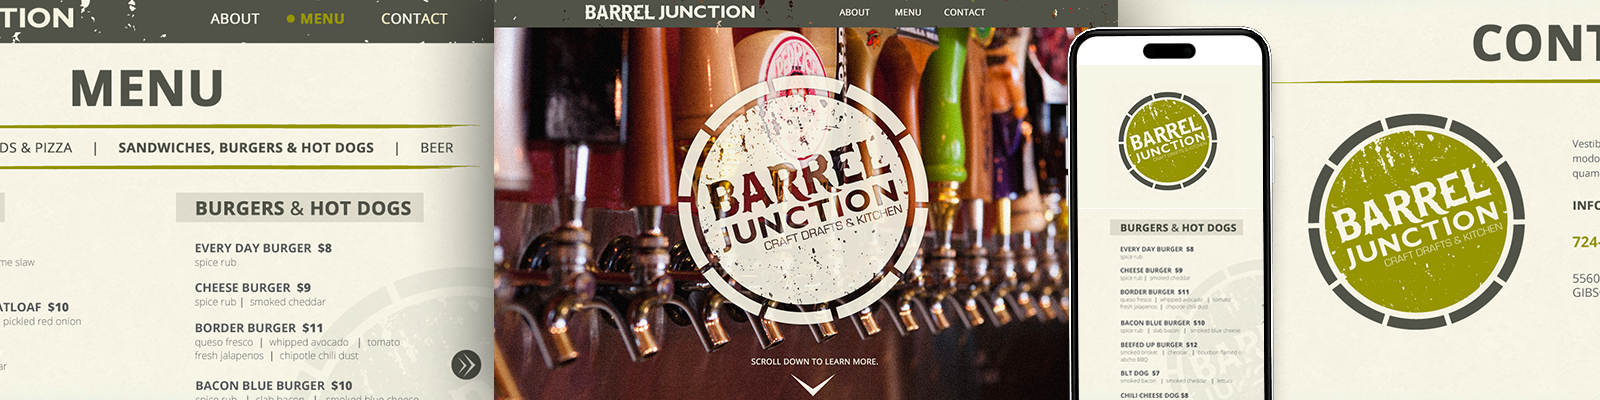 barrel junction